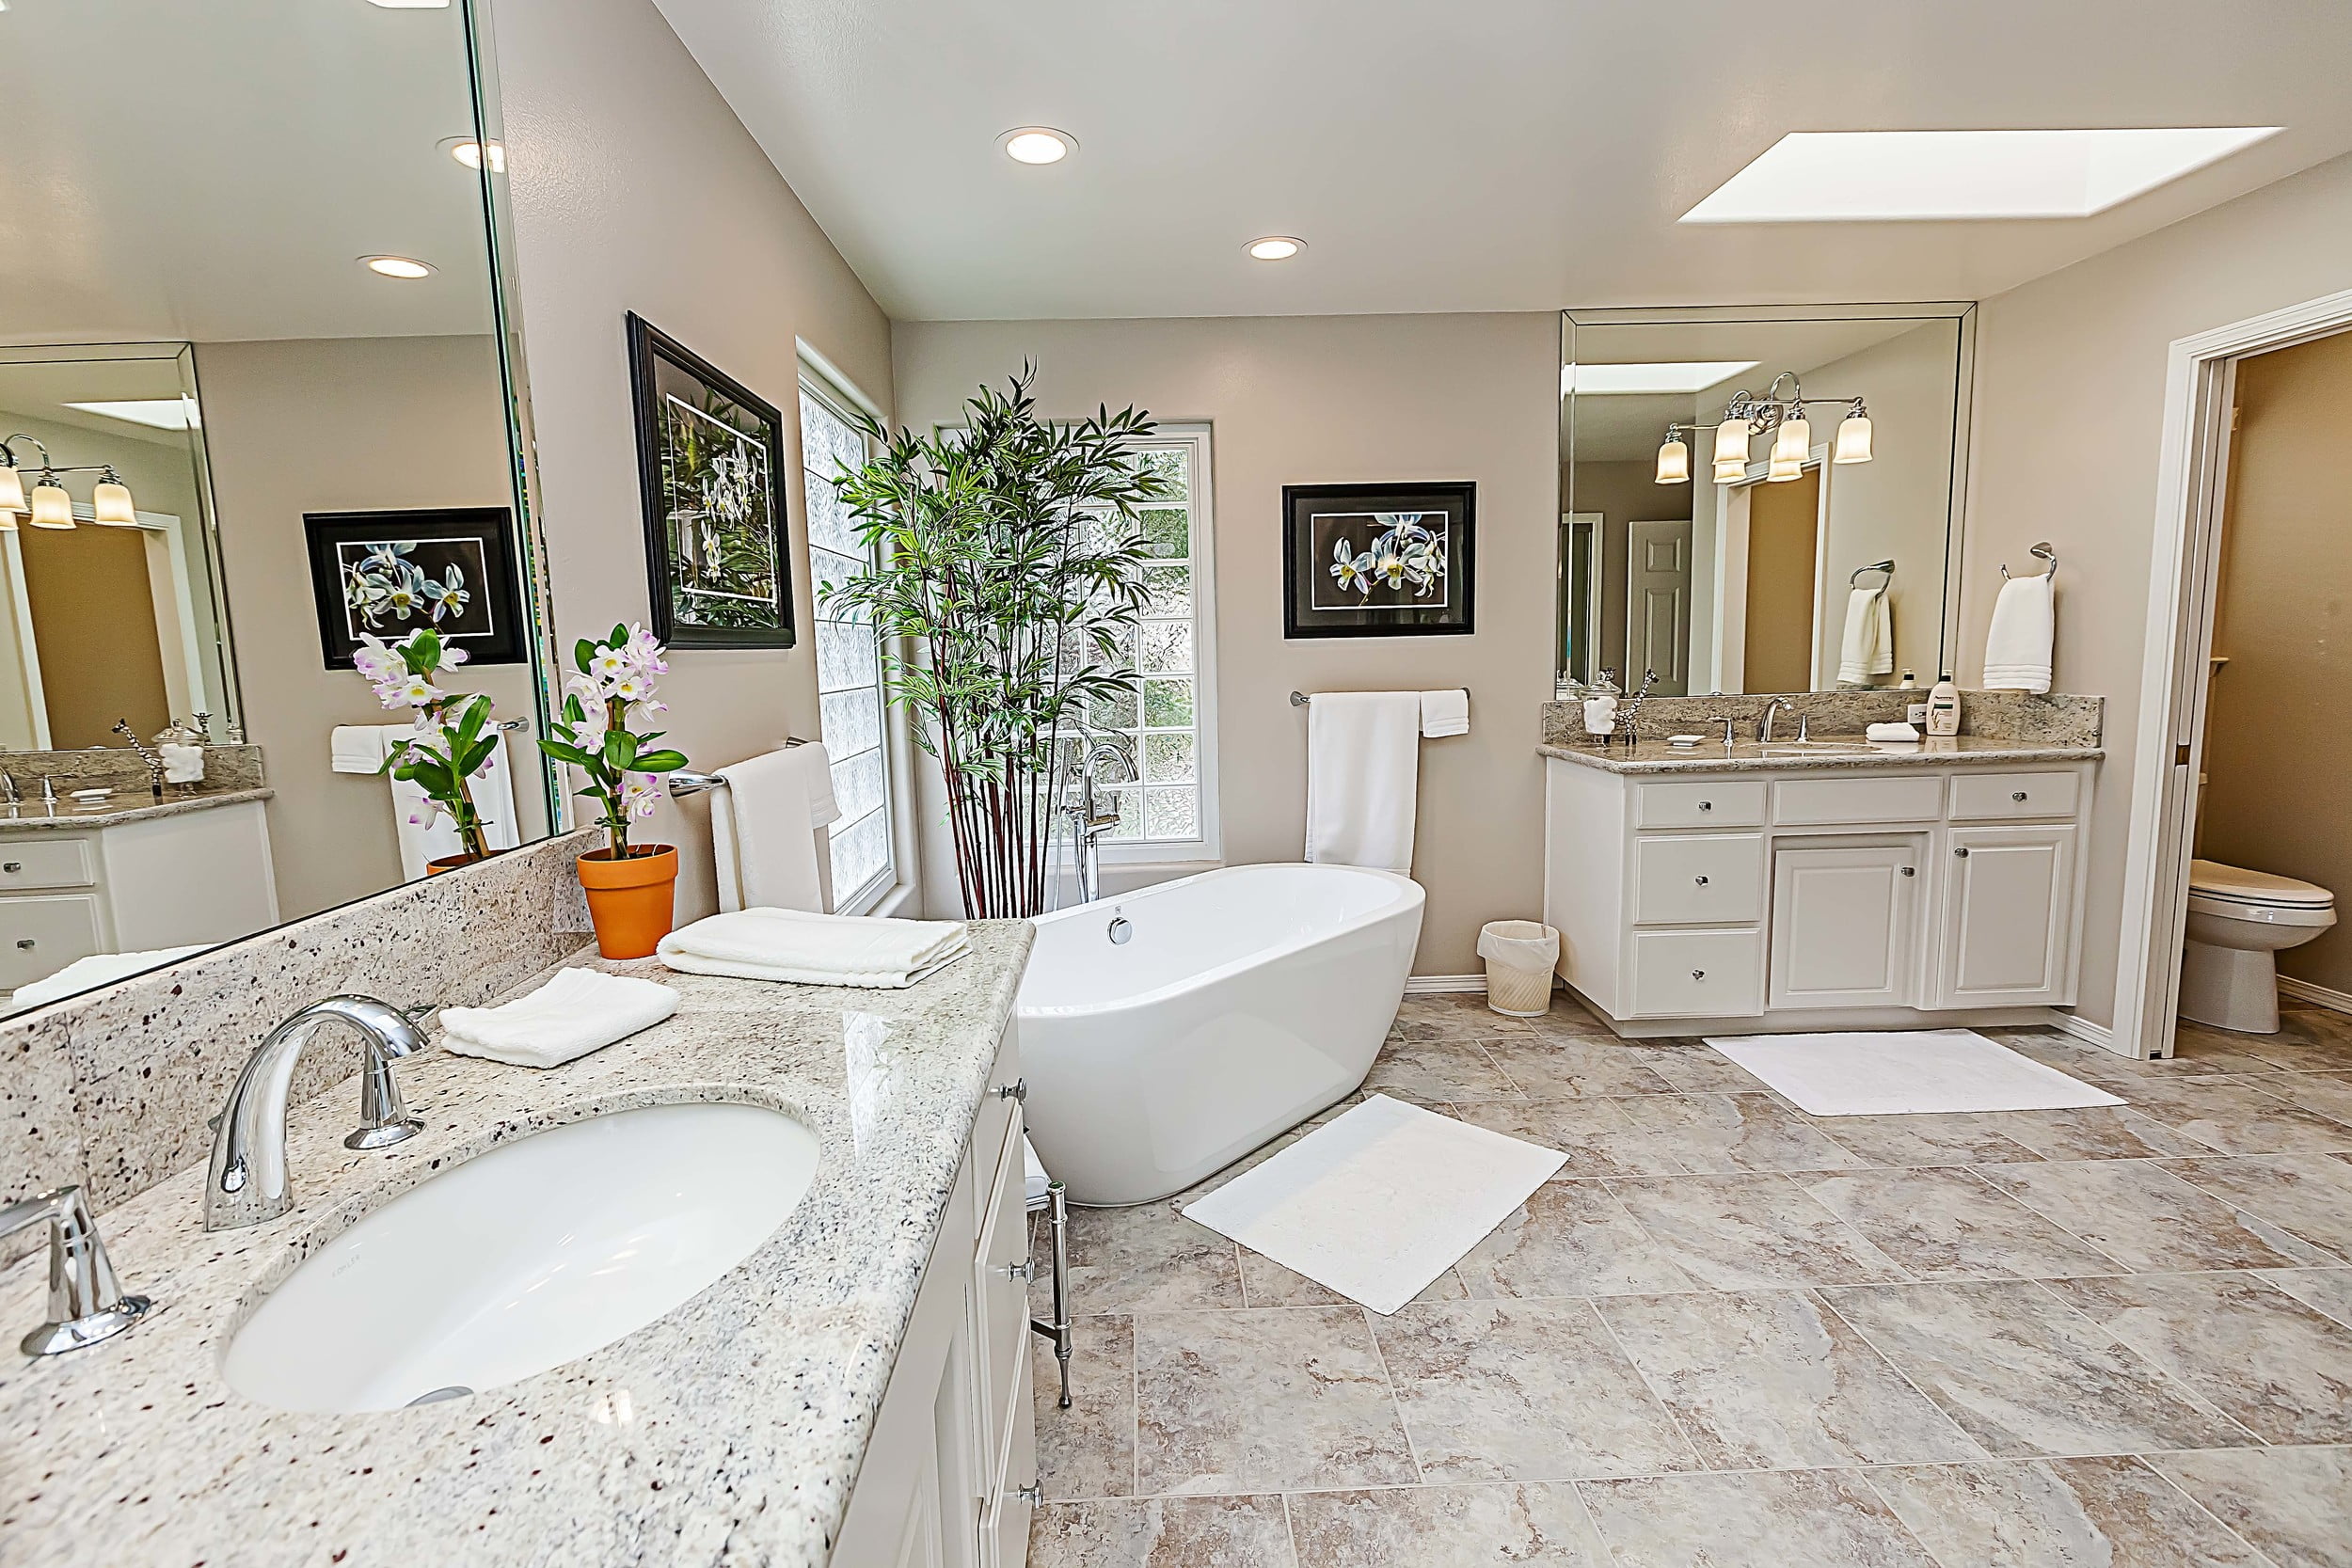 Bathroom renovation in Irvine